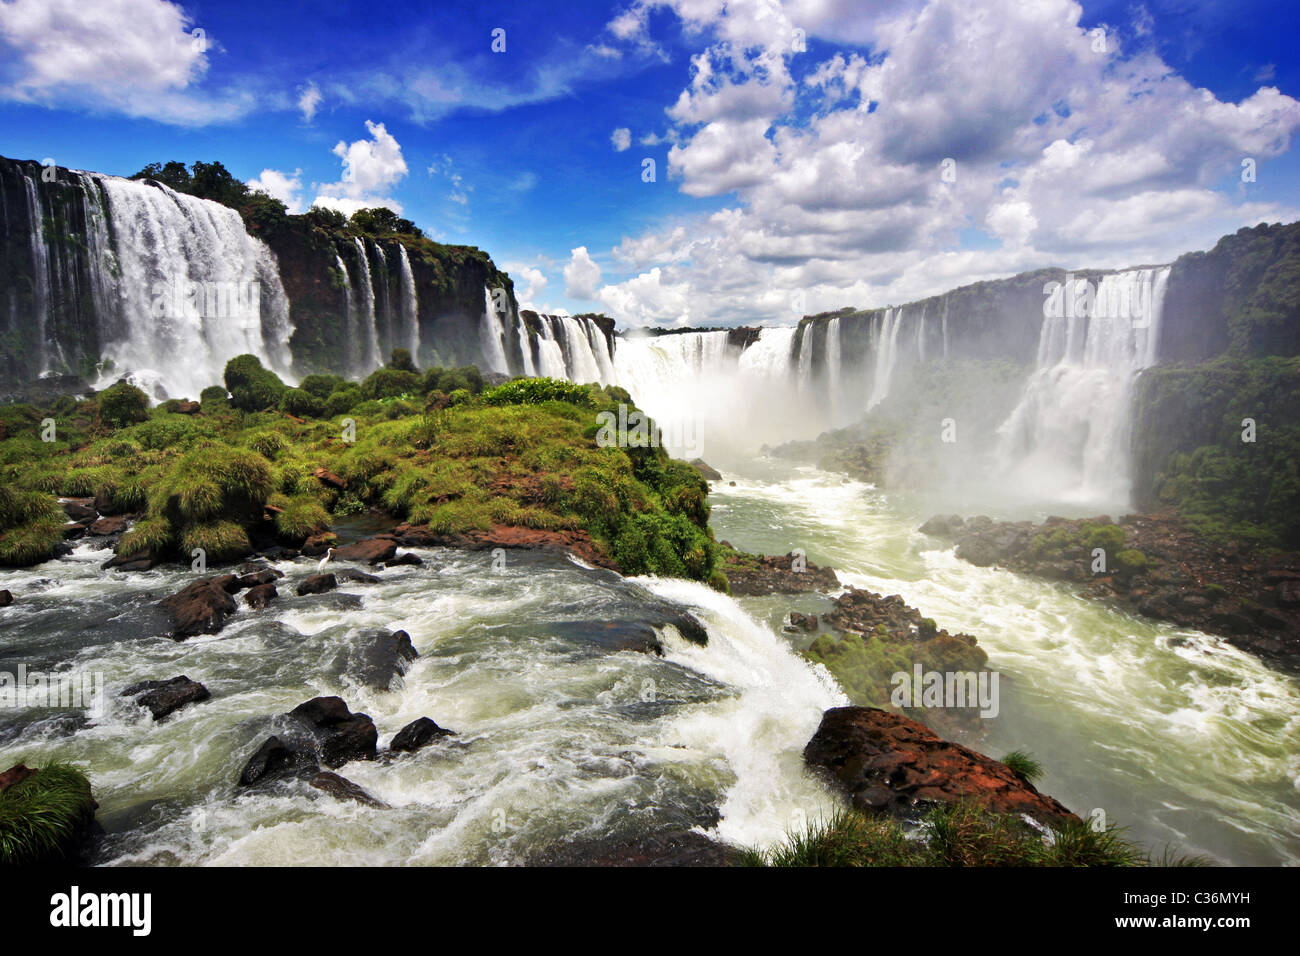 Cascate di Iguassù, Iguassu Falls, o Iguaçu Falls sono le cascate Foto Stock